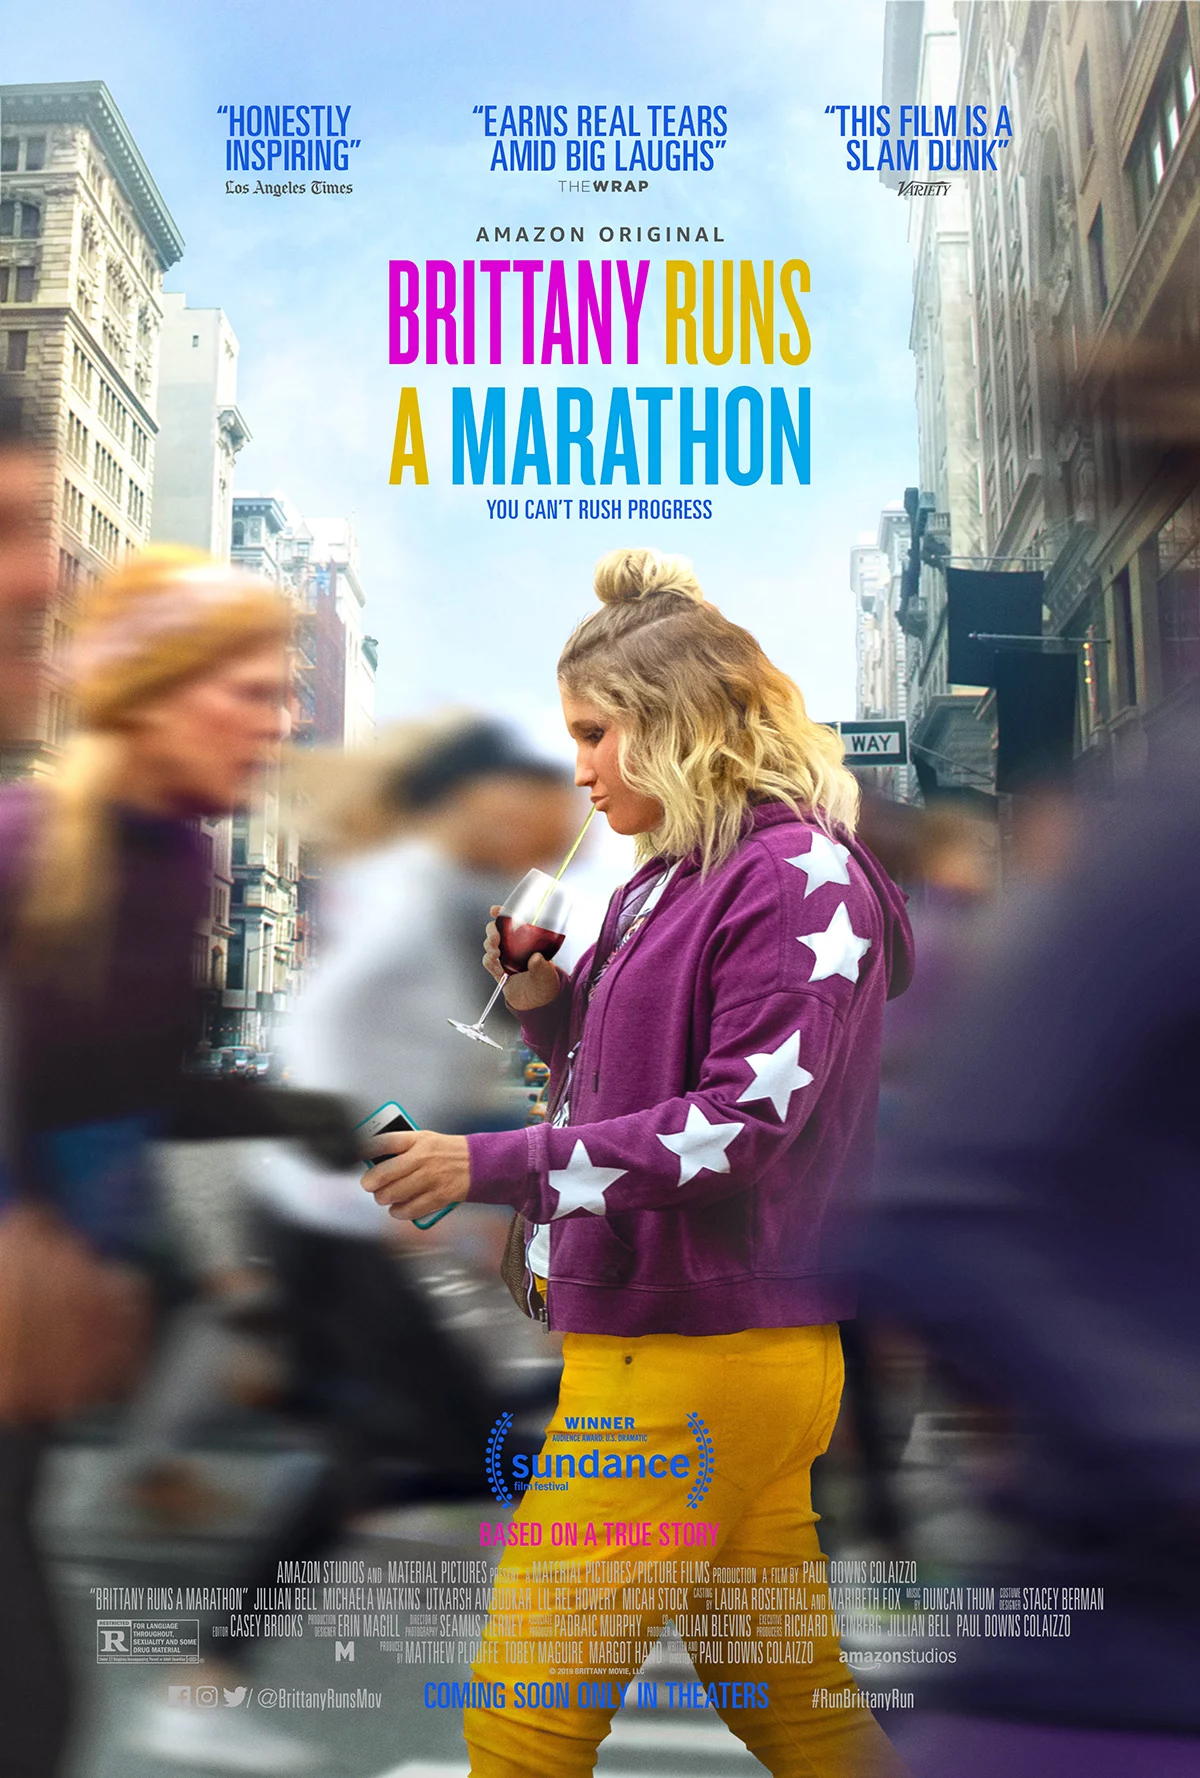 A Maratona de Brittany (2019)